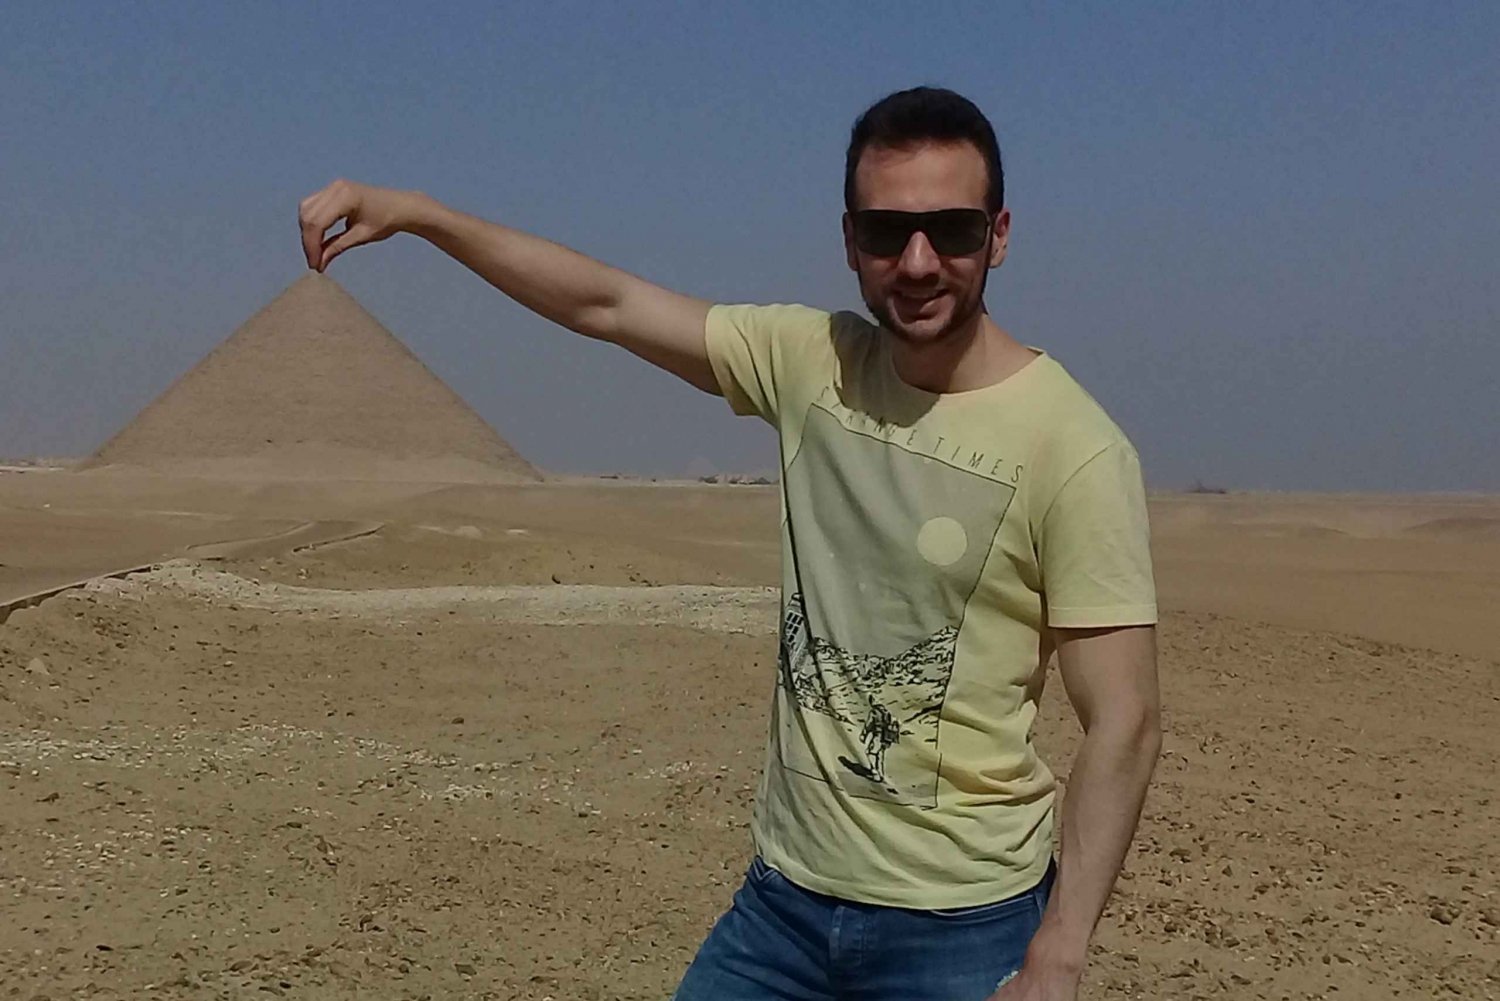 Fra Giza og Cairo: Pyramiderne, Sakkara & Dahshur Privat tur